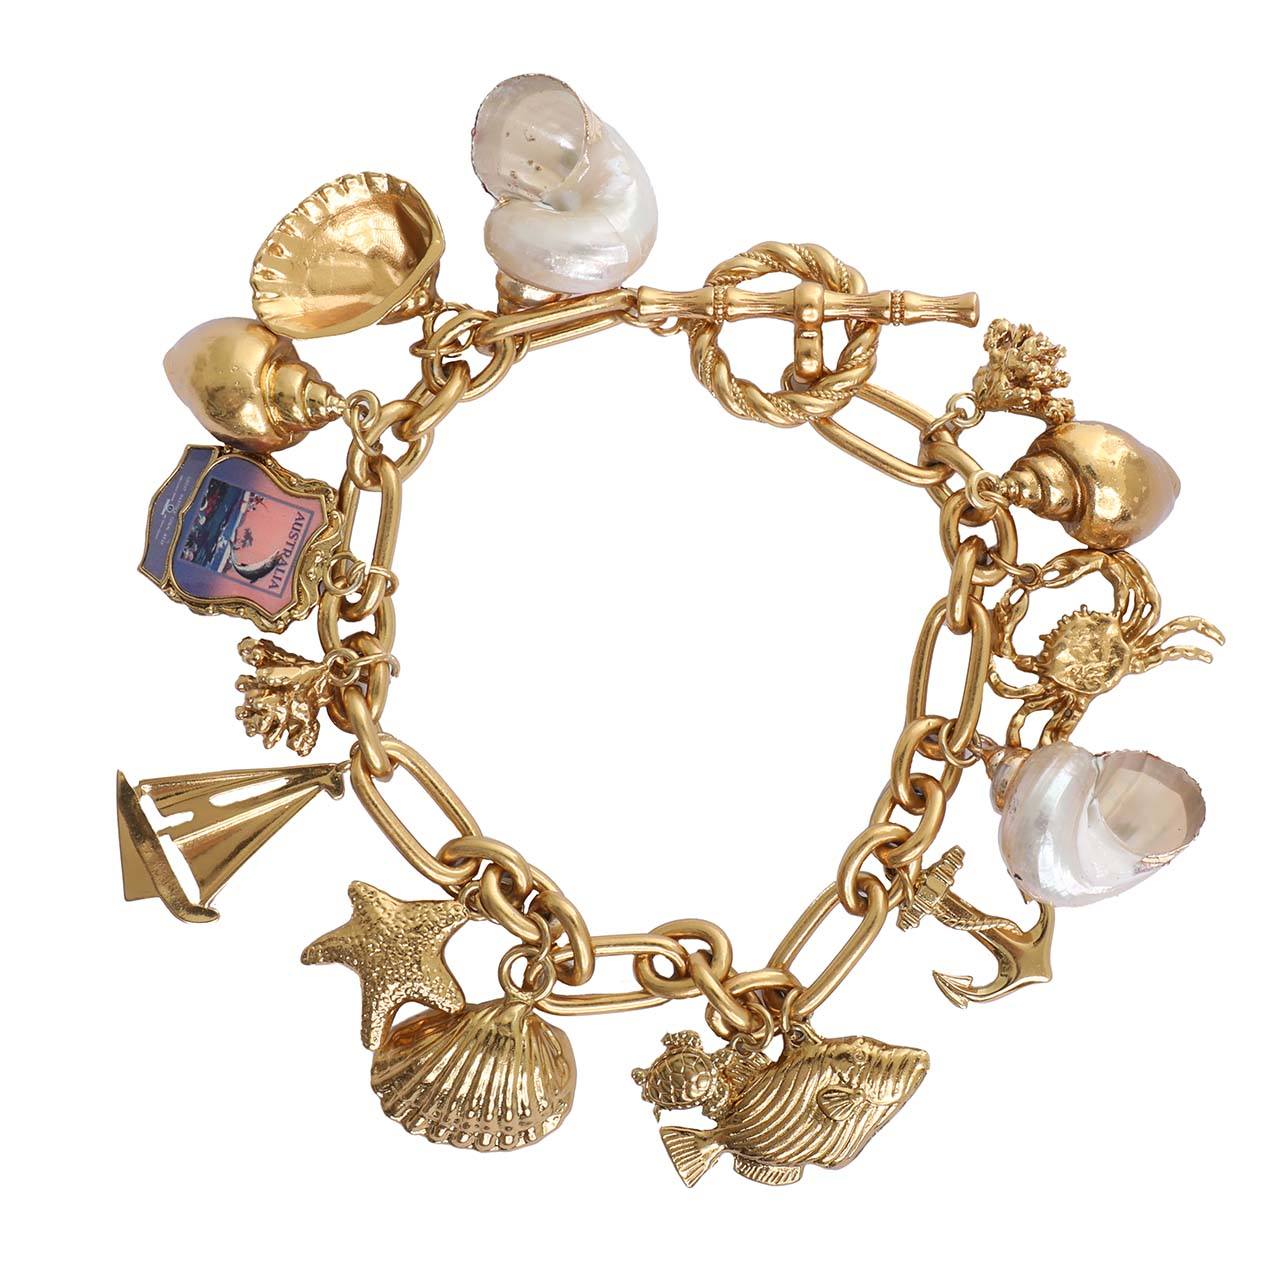 Gold chain charm bracelet